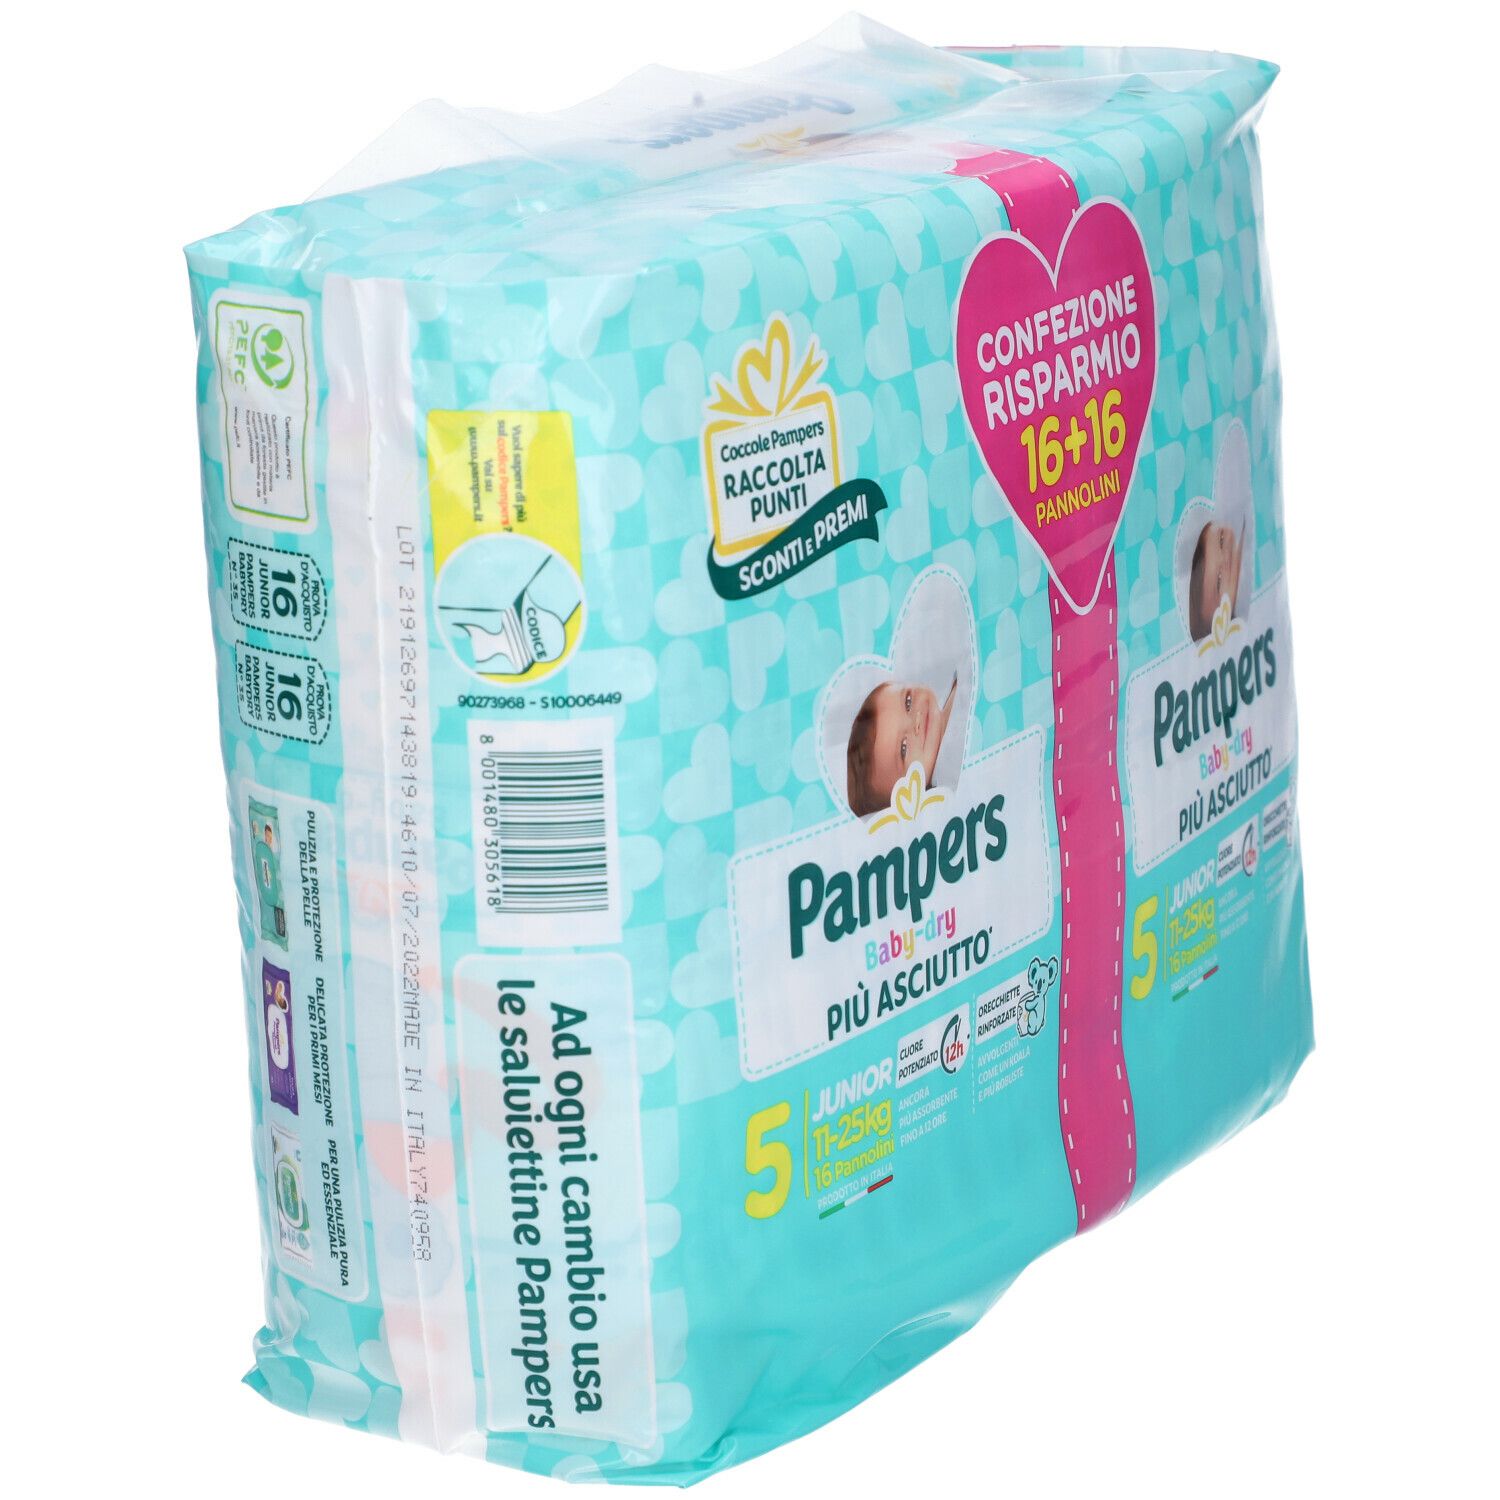 Pannolini Pampers Baby Dry taglia 5 Junior 11-25 kg. –